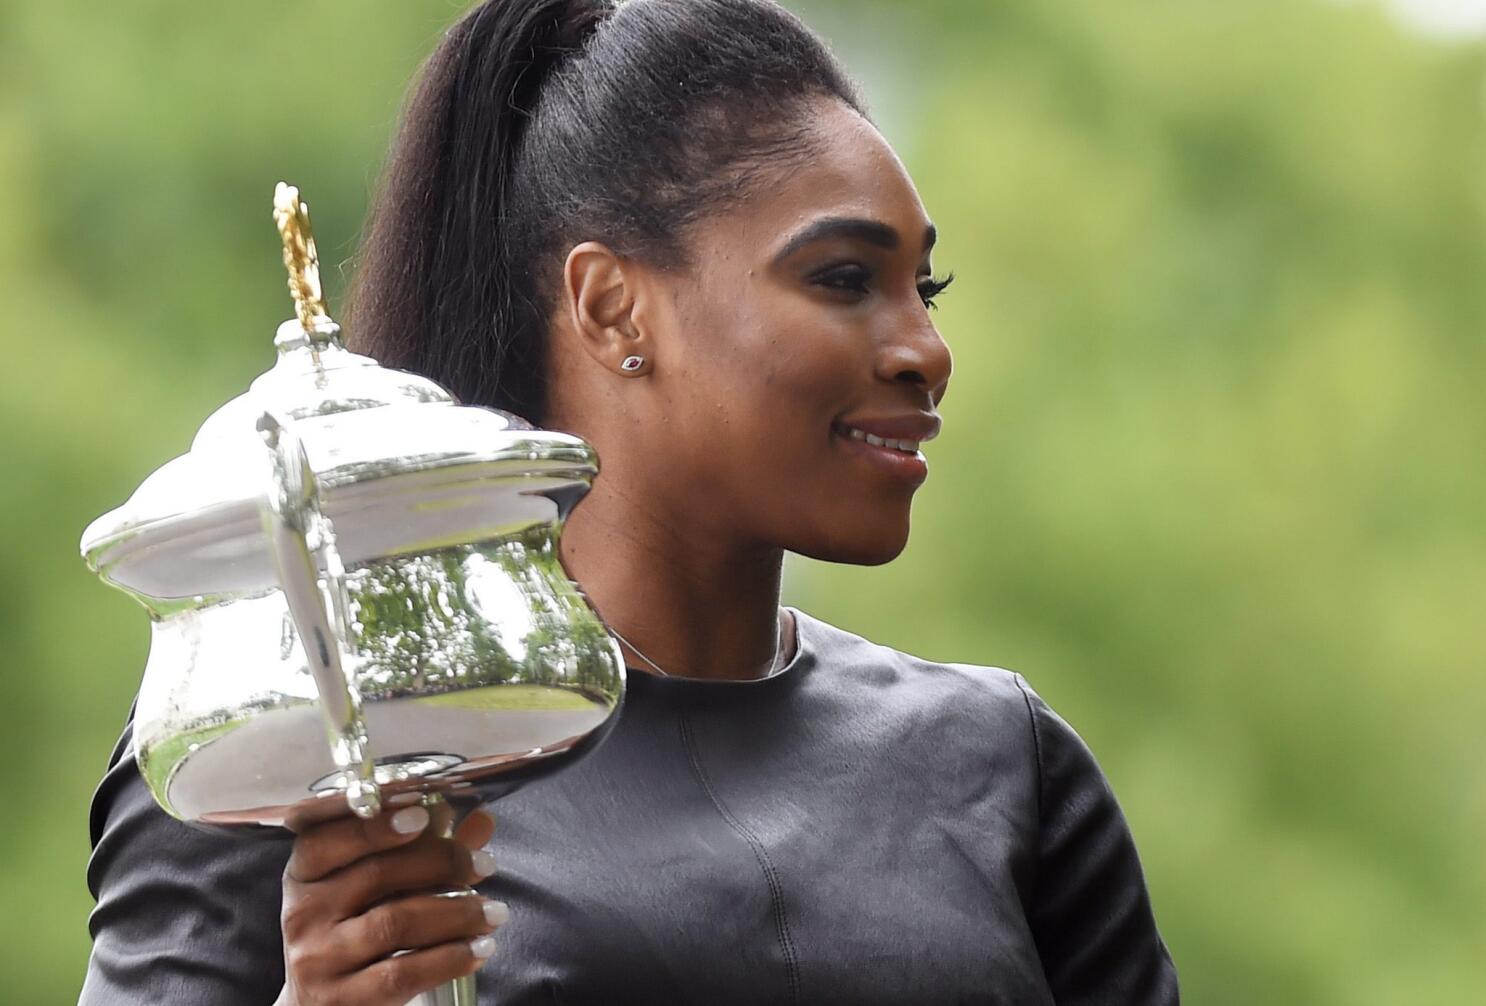 Serena Williams - Sports - The Shorty Awards